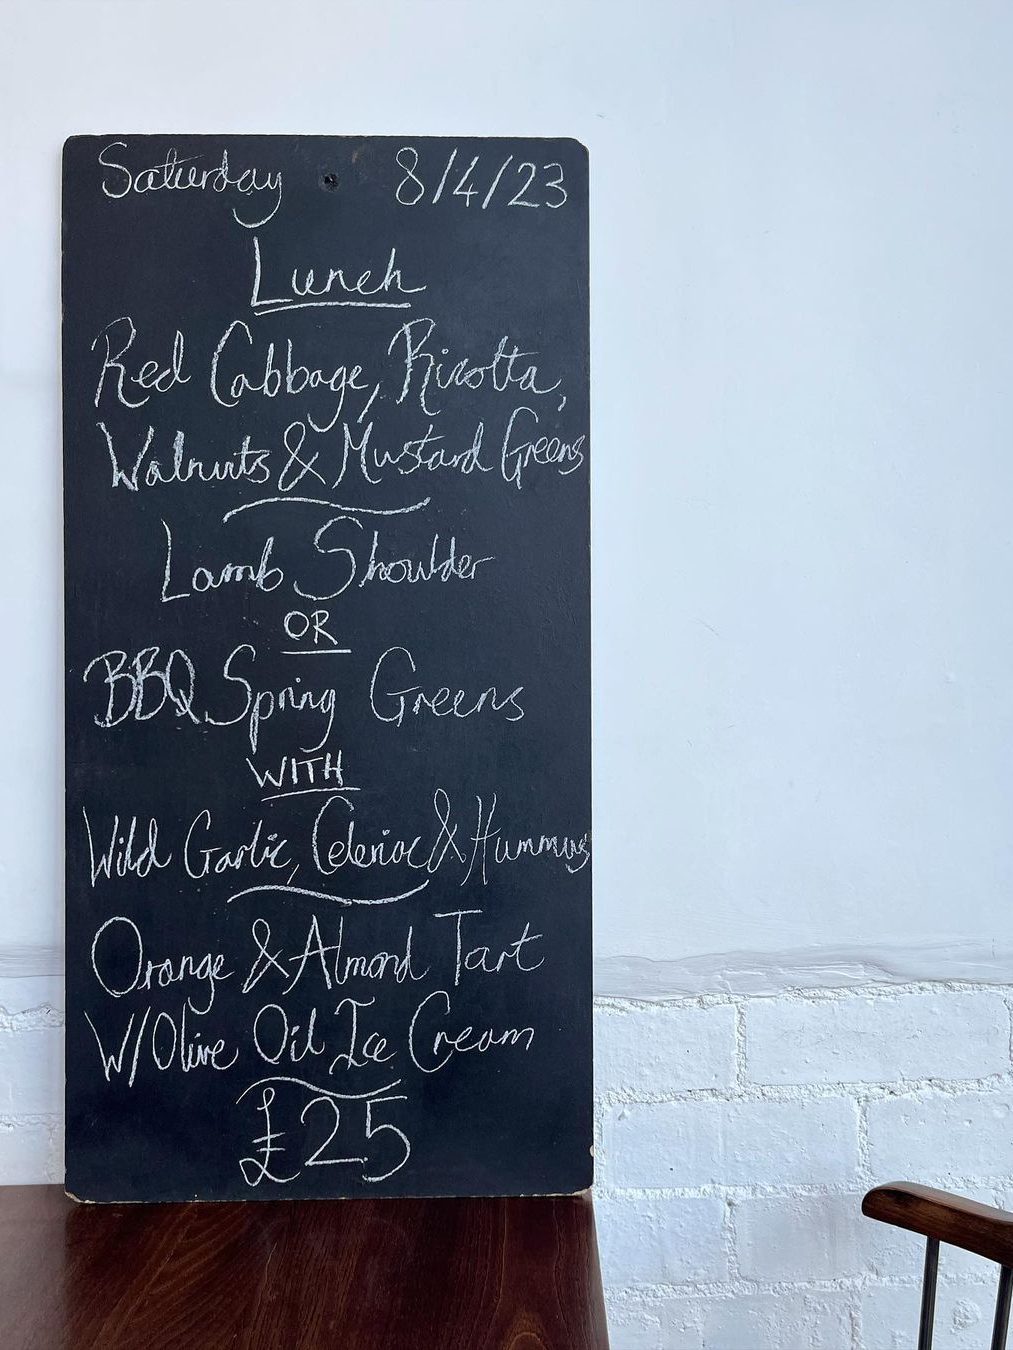 A menu chalkboard with Saturday lunch menu written on it.